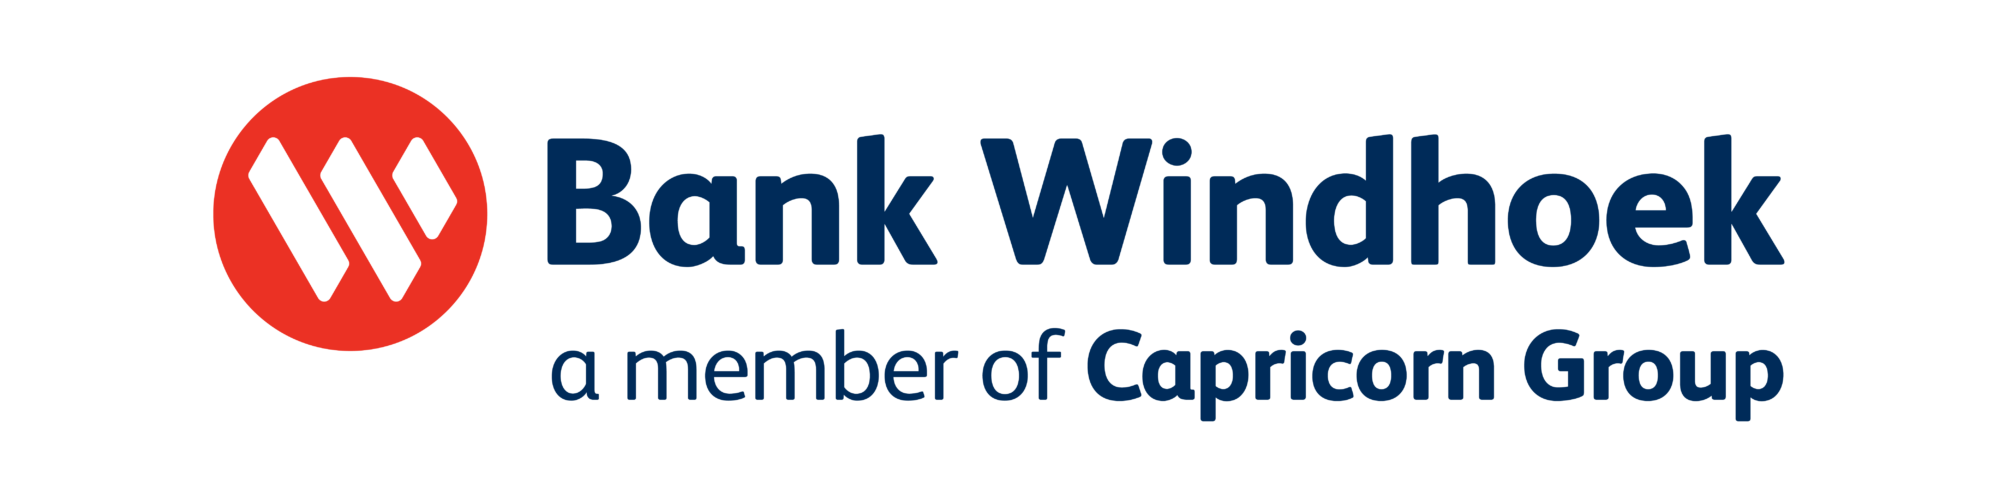 Bank_Windhoek_Logo-01